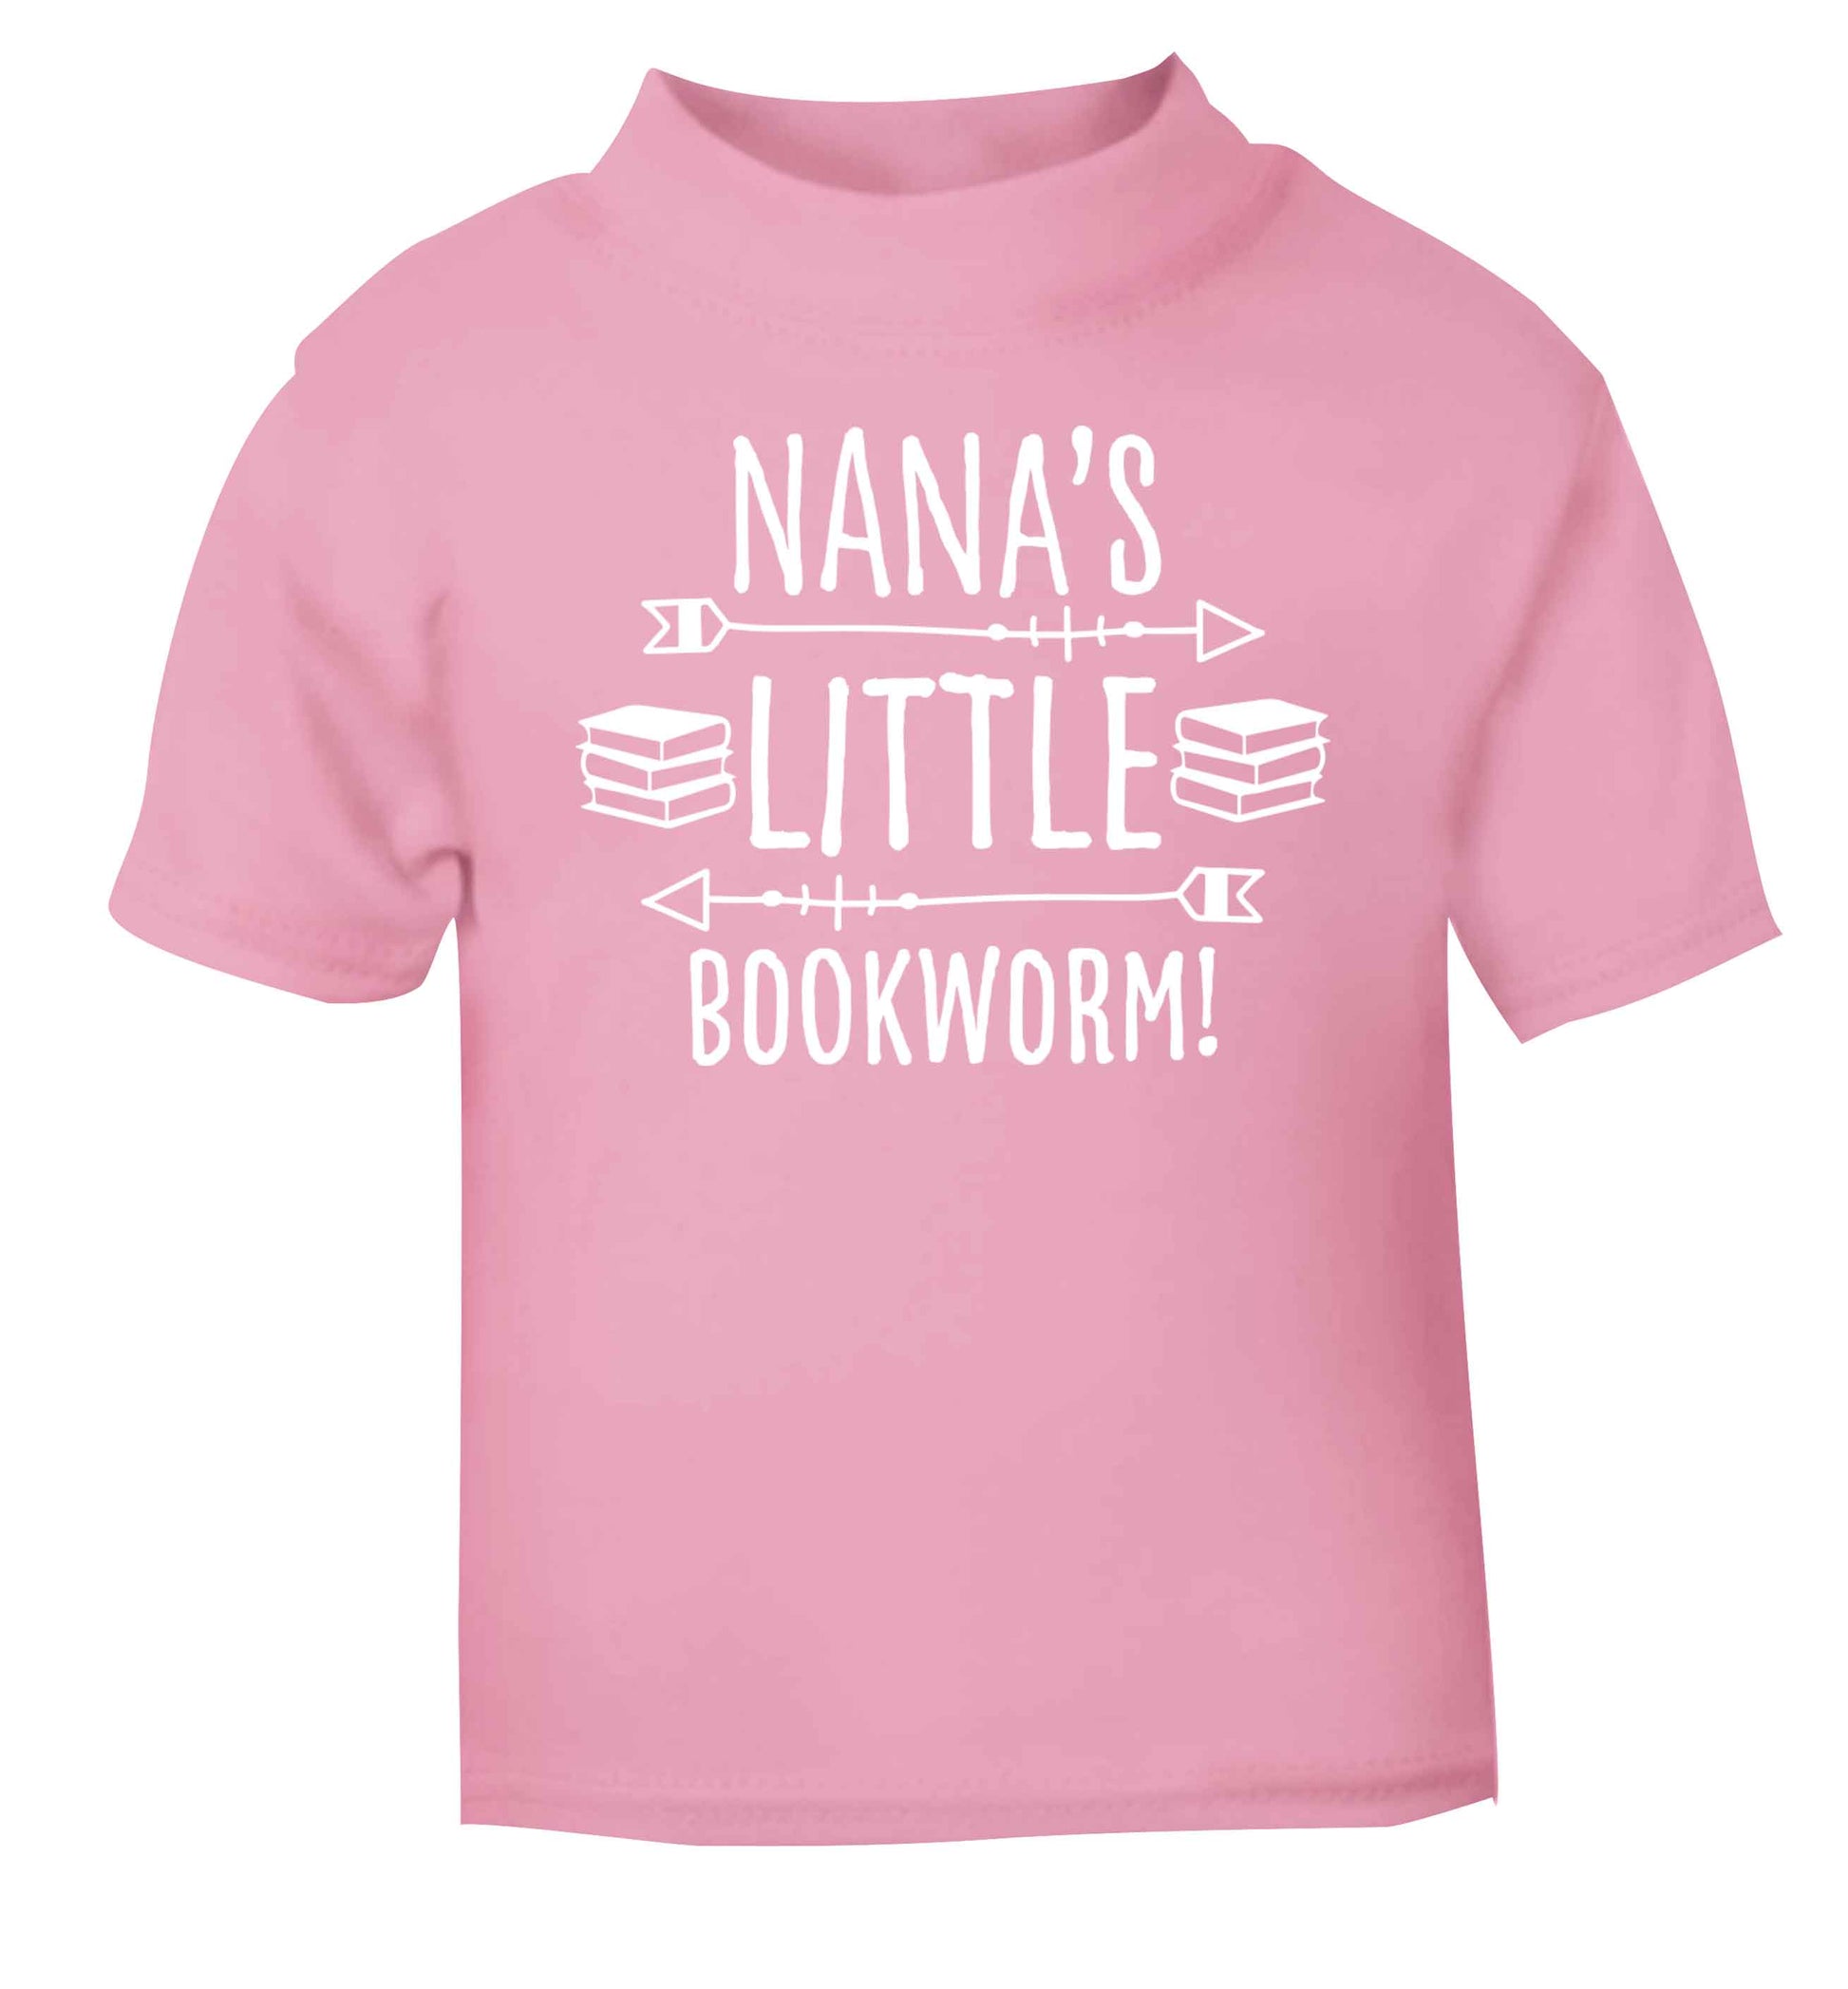 Nana's little bookworm light pink baby toddler Tshirt 2 Years